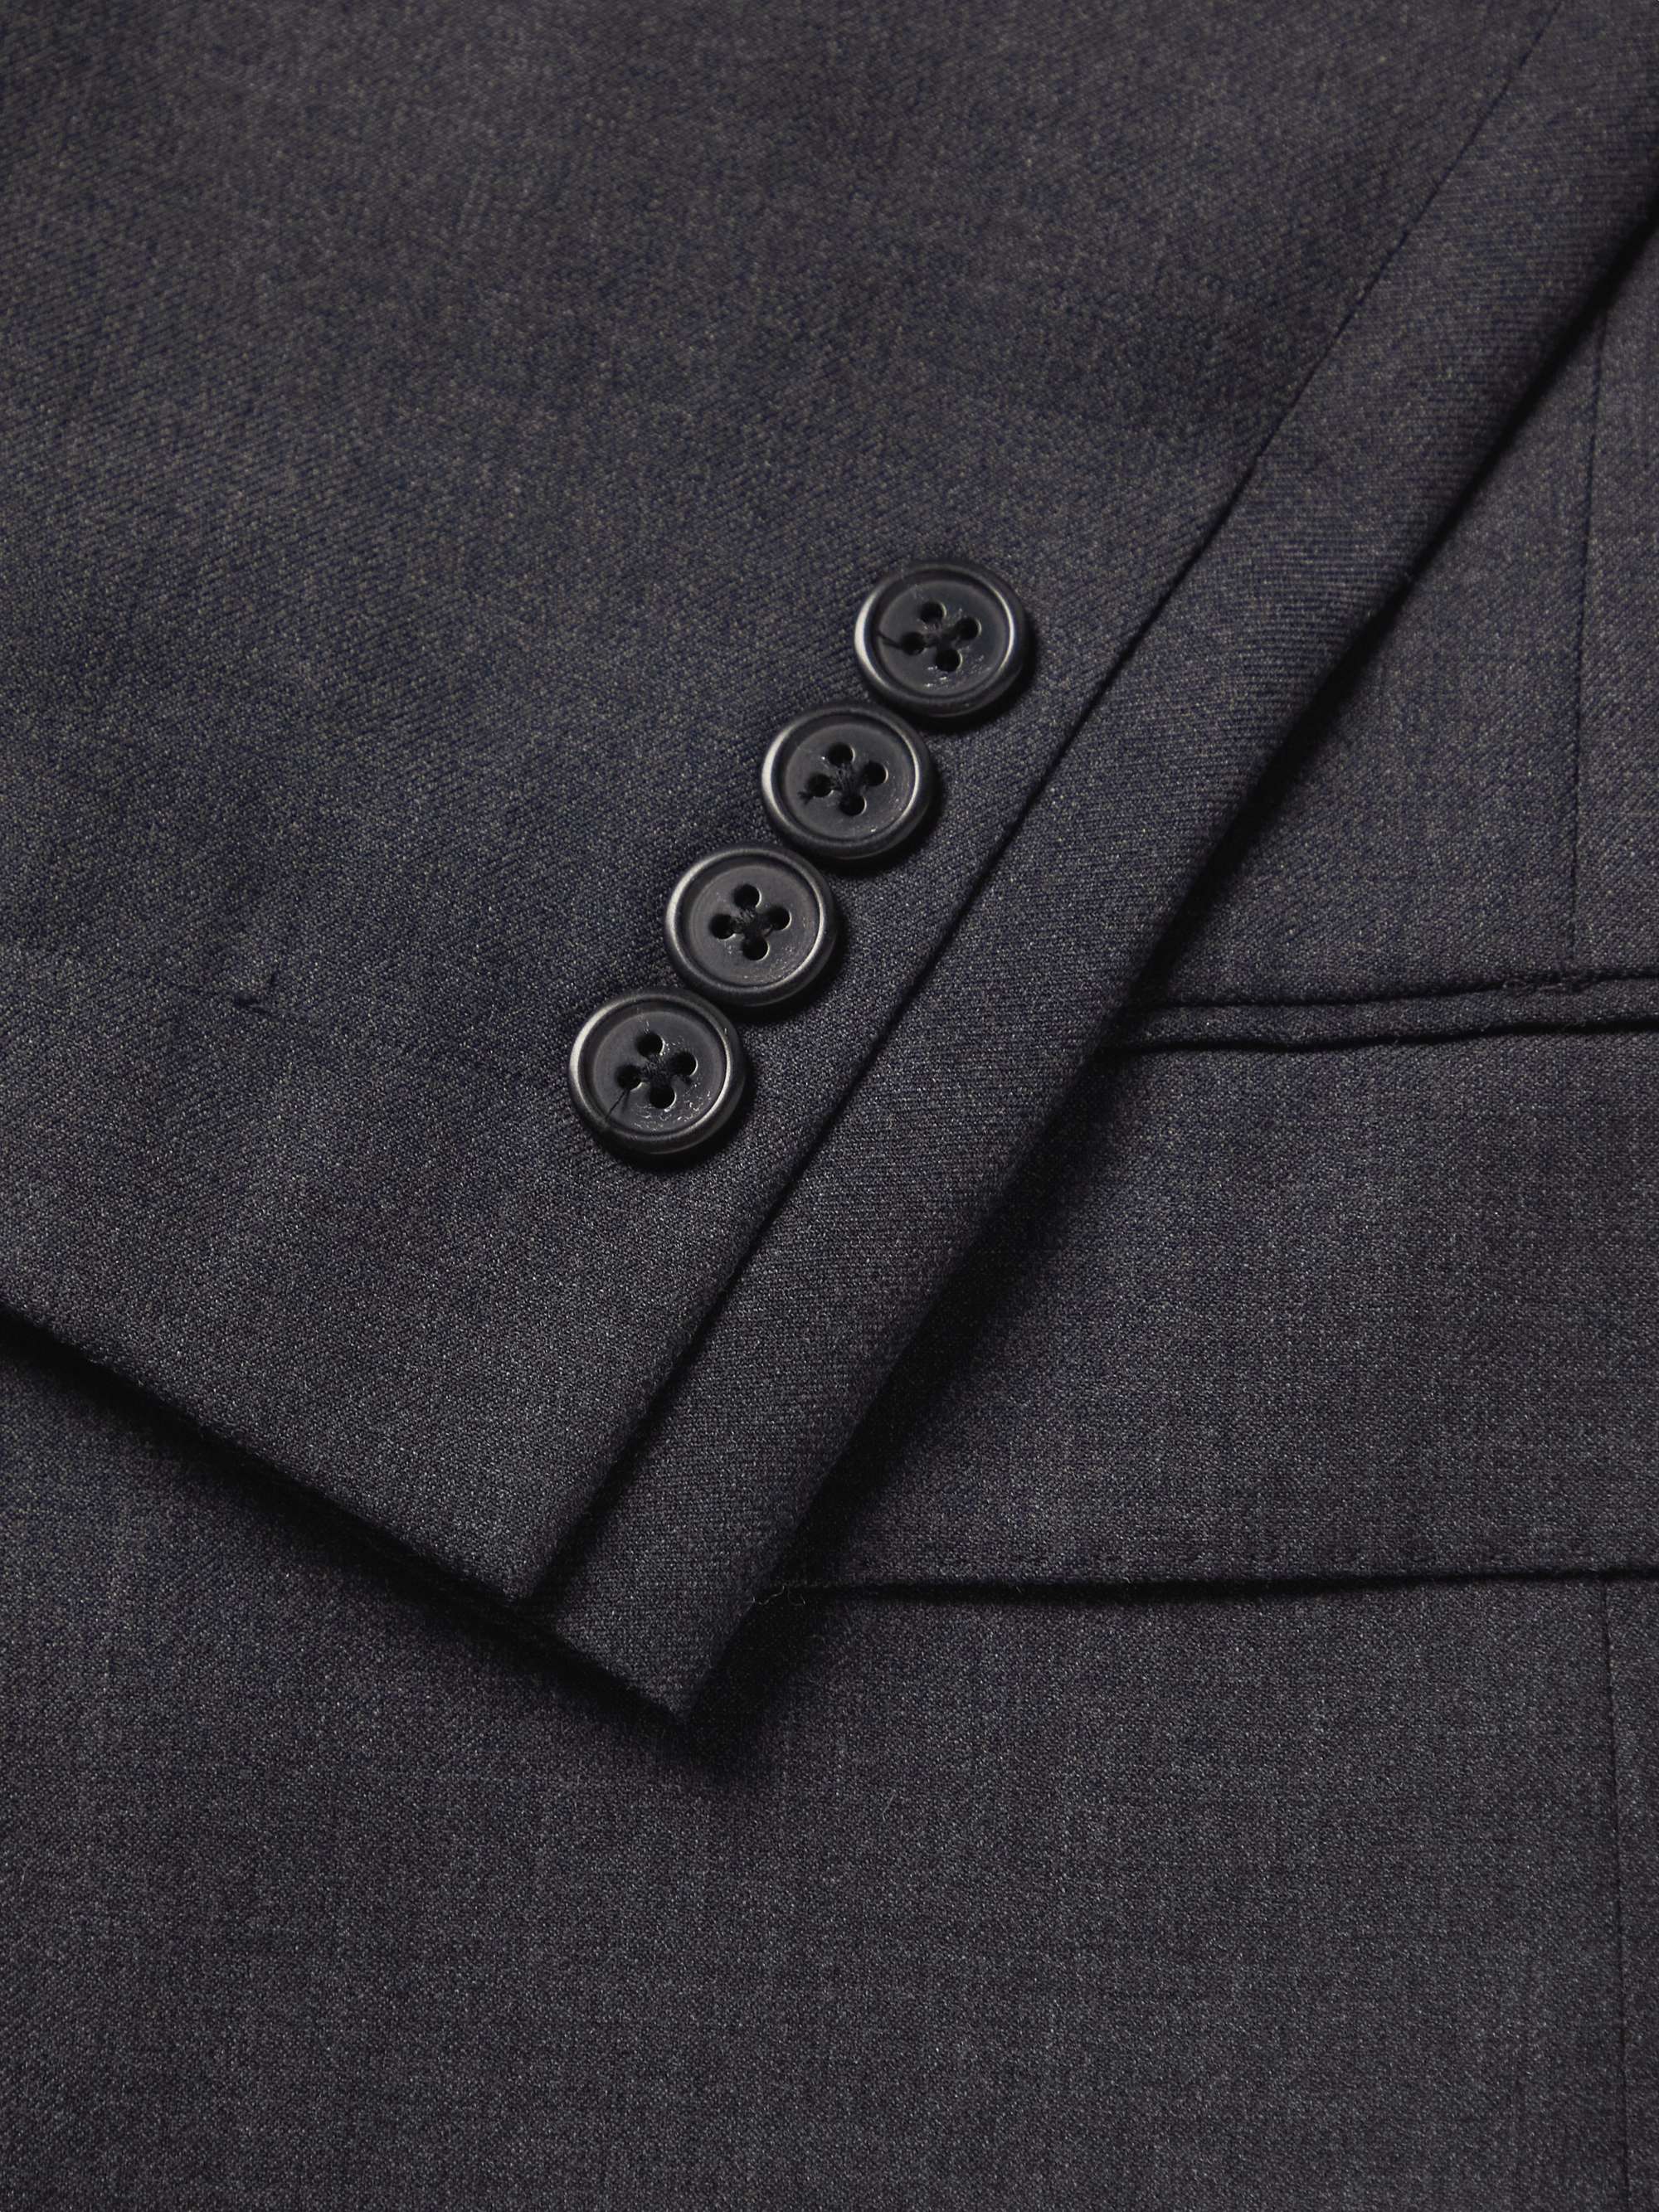 POLO RALPH LAUREN Wool-Blend Suit Jacket for Men | MR PORTER